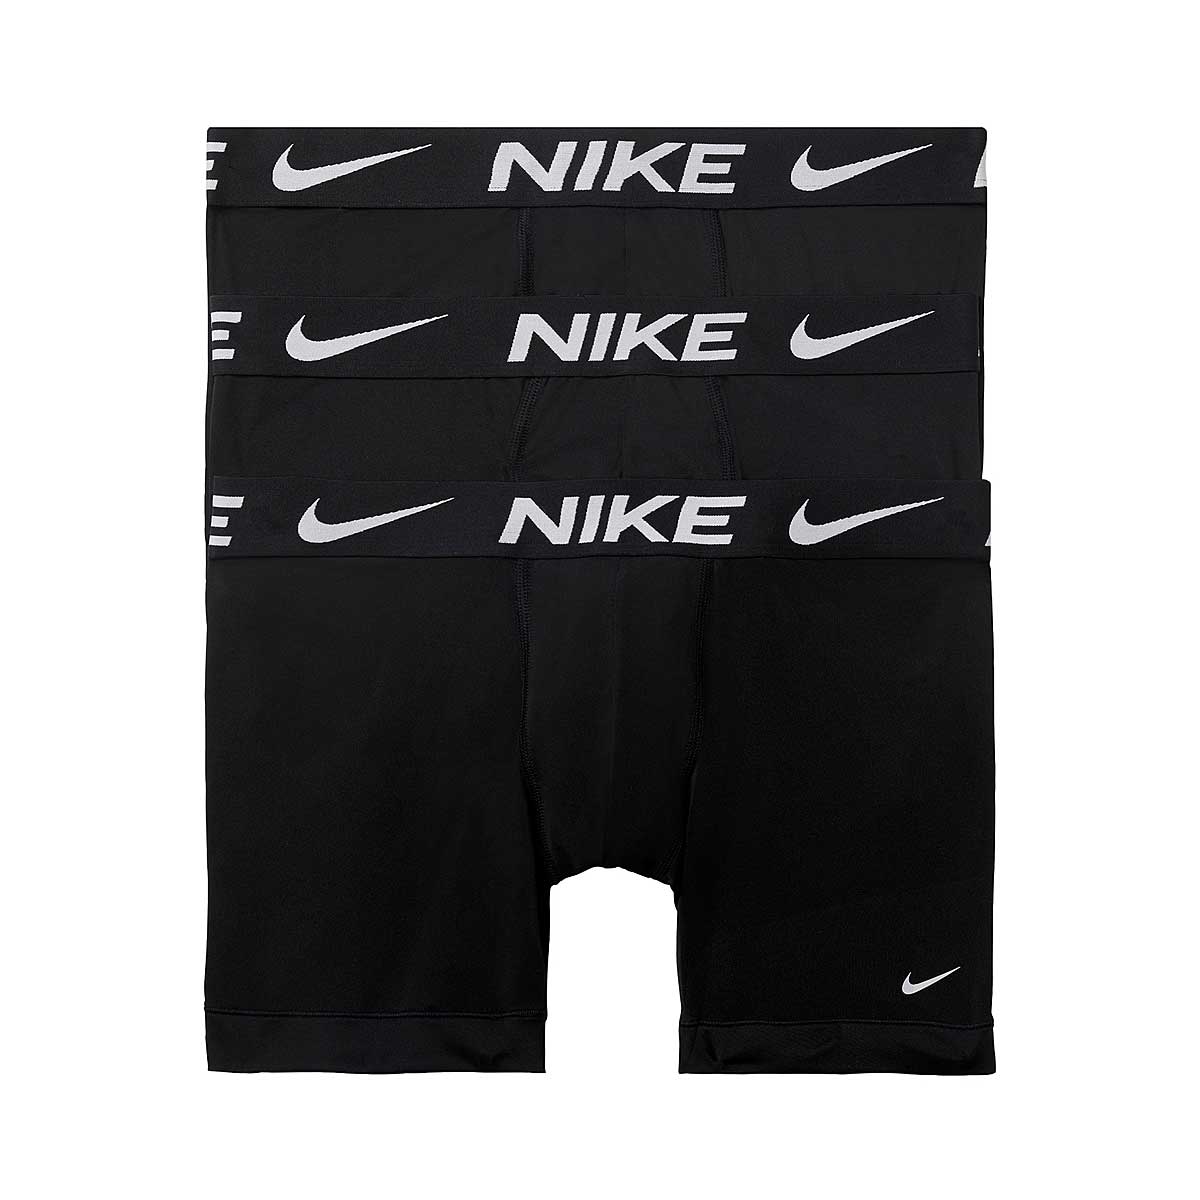 Nike Boxer Brief 3Pk, Black/Black/Black